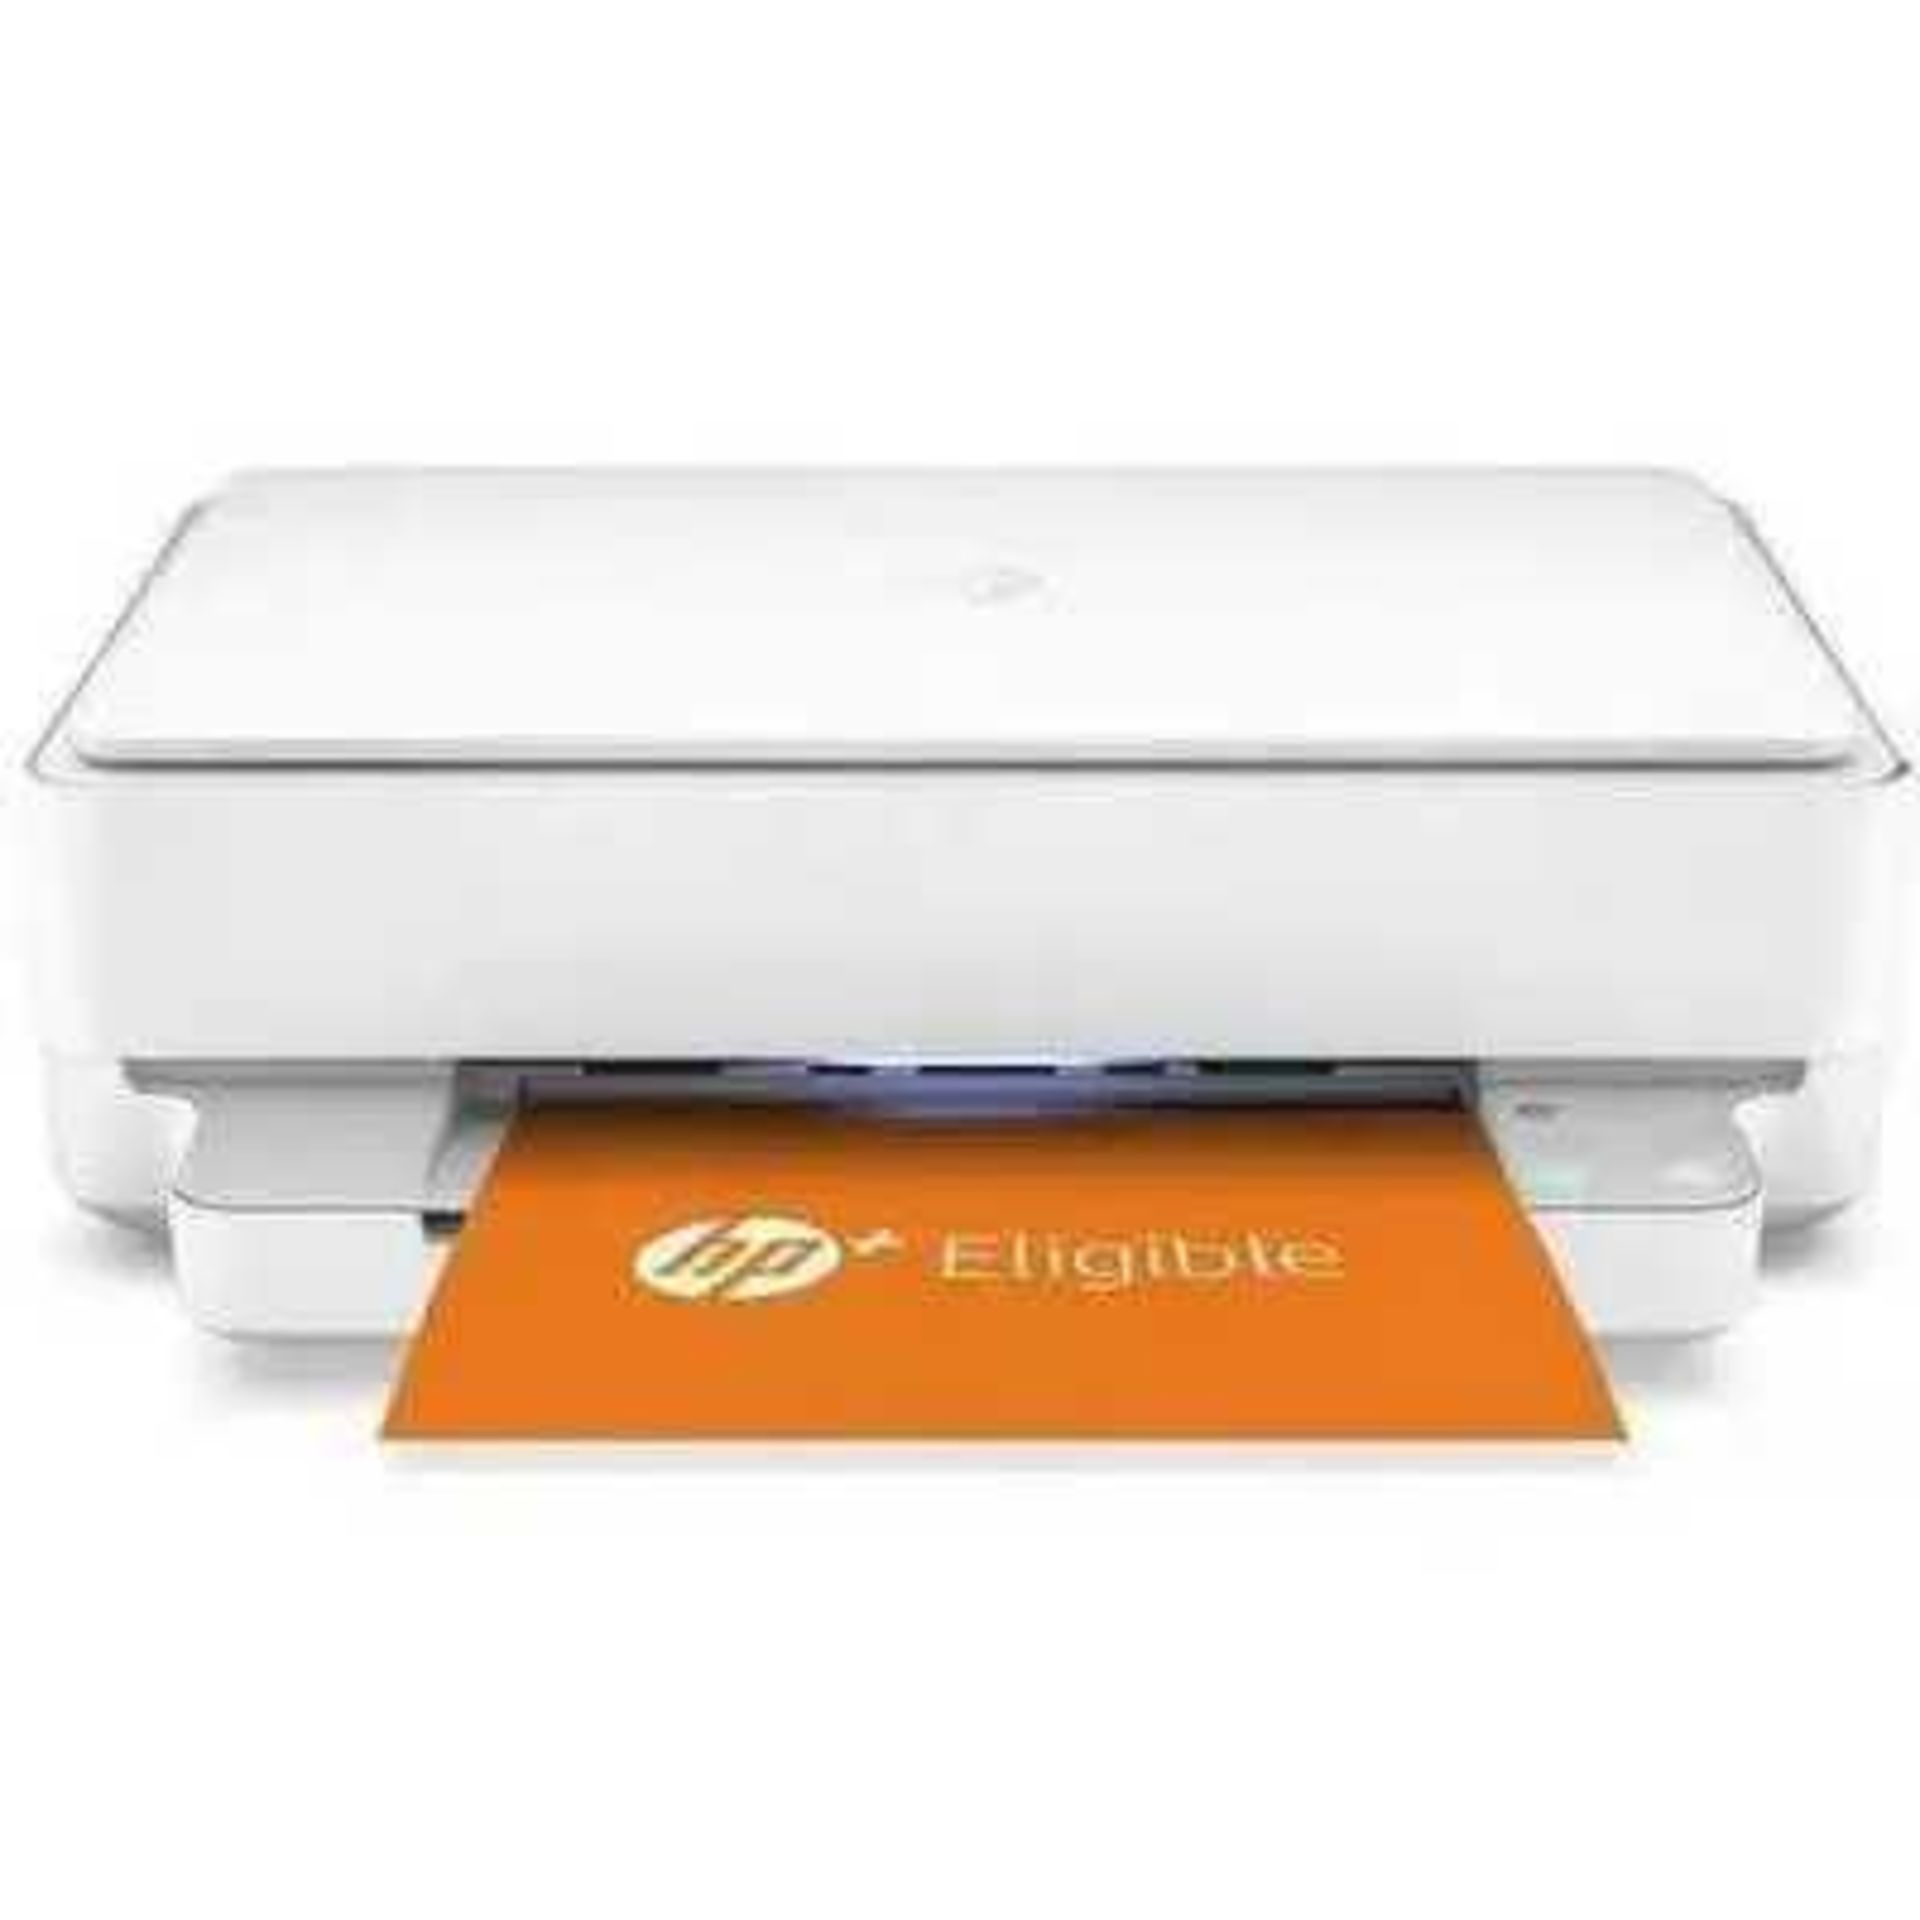 RRP £100 Boxed Hp Envy 6030E Printer Scanner Copier